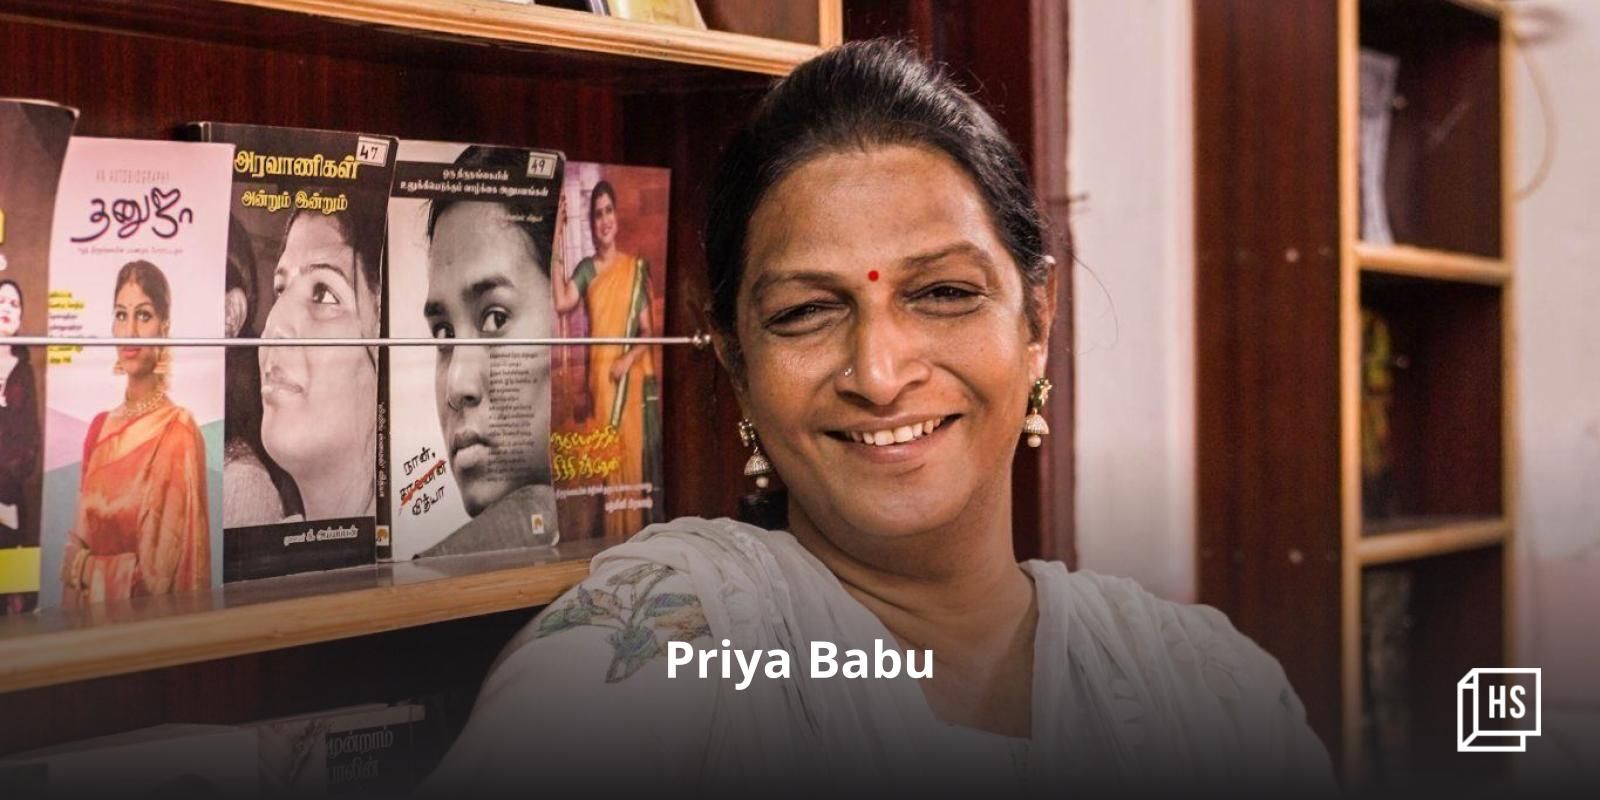 Transgender activist Priya Babu is helping the trans community find a purpose and livelihood